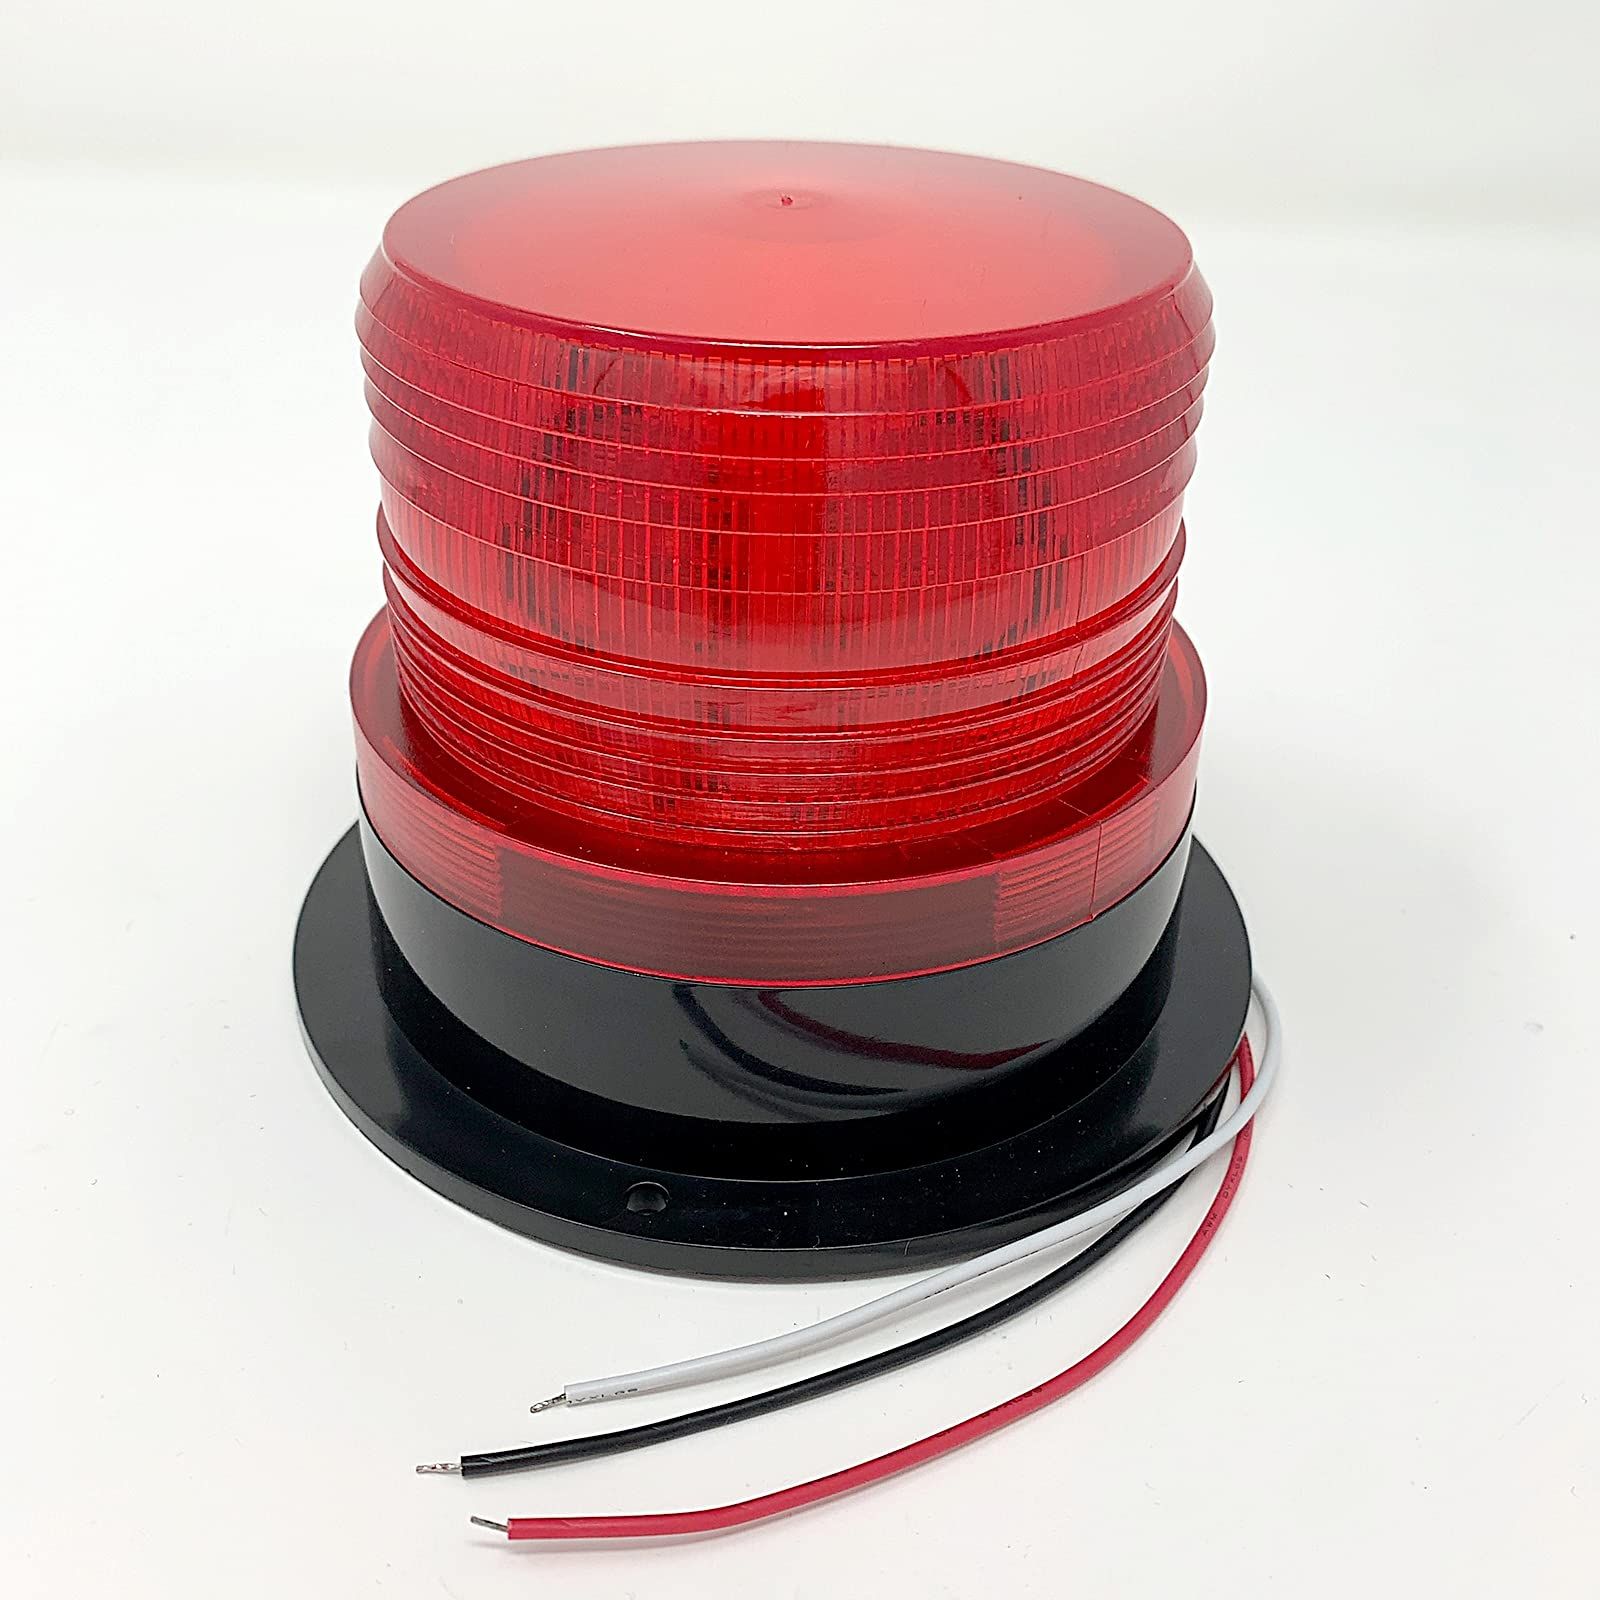 TradeWind] 警告灯 LED フラッシュライト ストロボ ライト パトランプ 非常信号灯 緊急灯 点滅可 車 バイク トラック 船舶  12/24V兼用 (赤レッド) [赤レッド] [94ｍｍ] - メルカリ